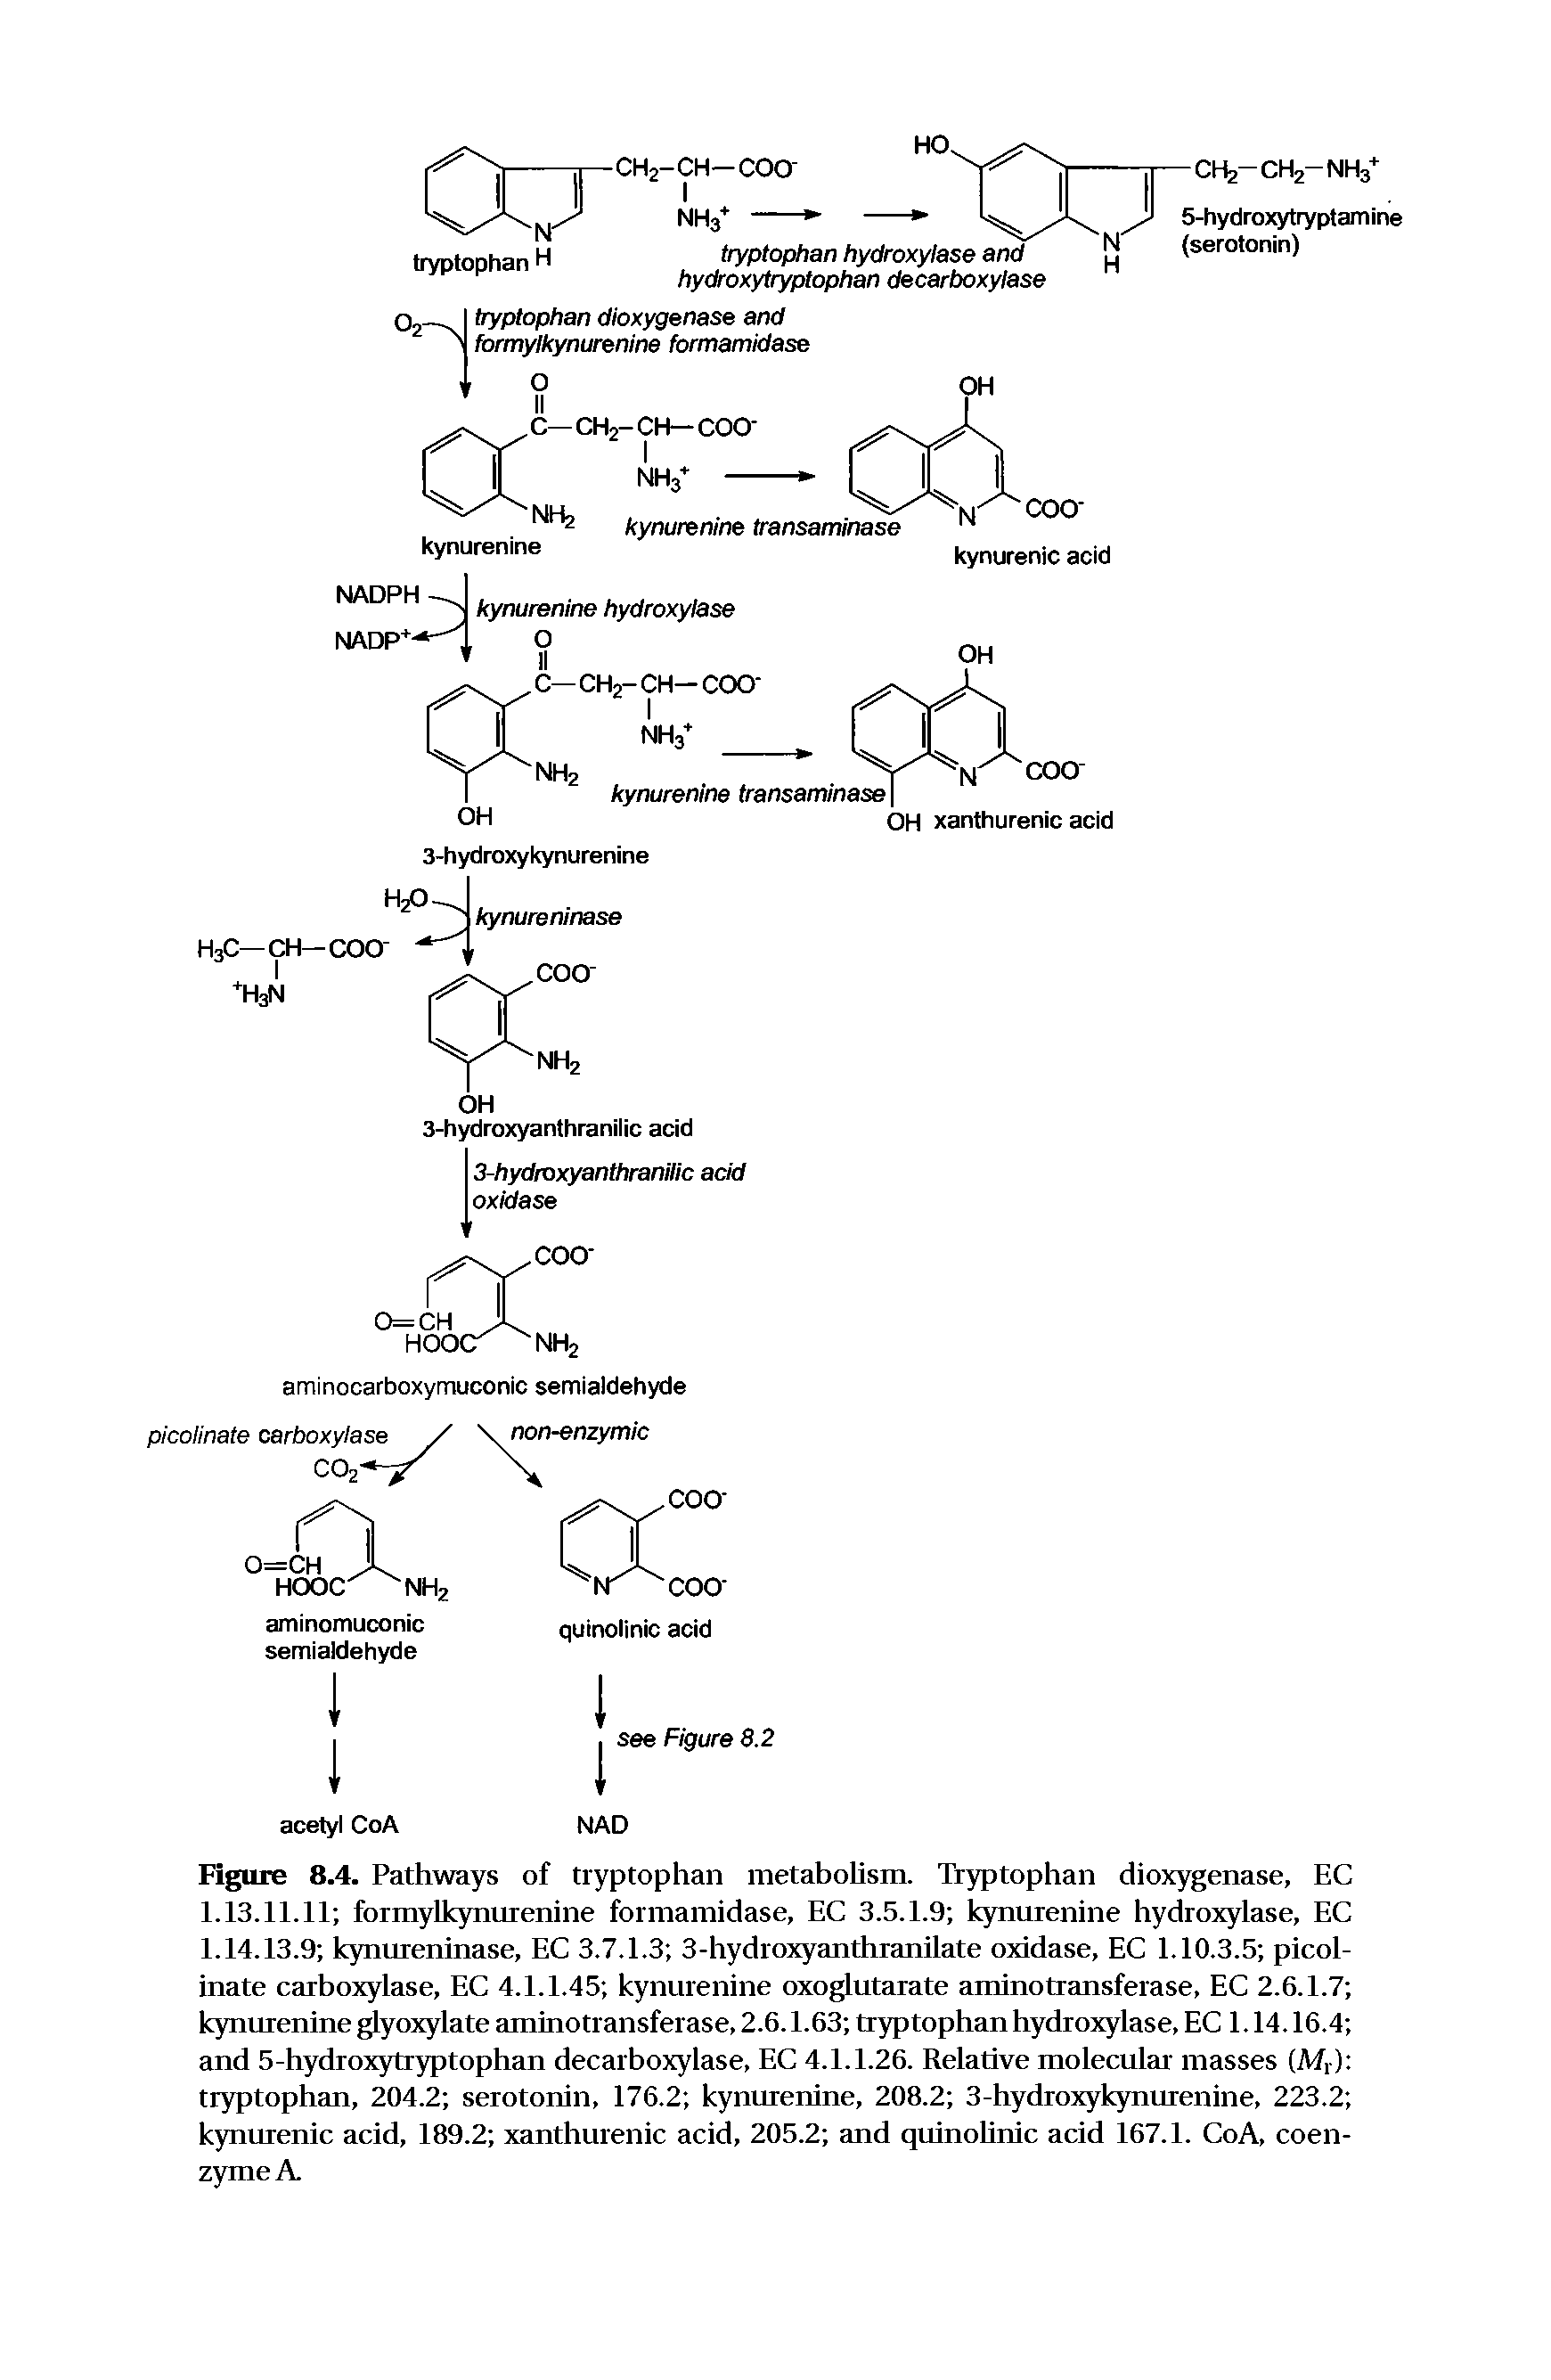 Figure 8.4. Pathways of tryptophan metabolism. Tryptophan dioxygenase, EC 1.13.11.11 formylkynurenine formamidase, EC 3.5.1.9 kynurenine hydroxylase, EC 1.14.13.9 kynttreninase, EC 3.7.1.3 3-hydroxyanthranilate oxidase, EC 1.10.3.5 picolinate carboxylase, EC 4.1.1.45 kynurenine oxoglutarate aminotransferase, EC 2.6.1.7 kynurenine glyoxylate aminotransferase, 2.6.1.63 tryptophan hydroxylase, EC 1.14.16.4 and 5-hydroxytryptophan decarboxylase, EC 4.1.1.26. Relative molecular masses (Mr) tryptophan, 204.2 serotonin, 176.2 kynurenine, 208.2 3-hydroxykynurenine, 223.2 kynurenic acid, 189.2 xanthurenic acid, 205.2 and quinolinic add 167.1. CoA, coenzyme A...